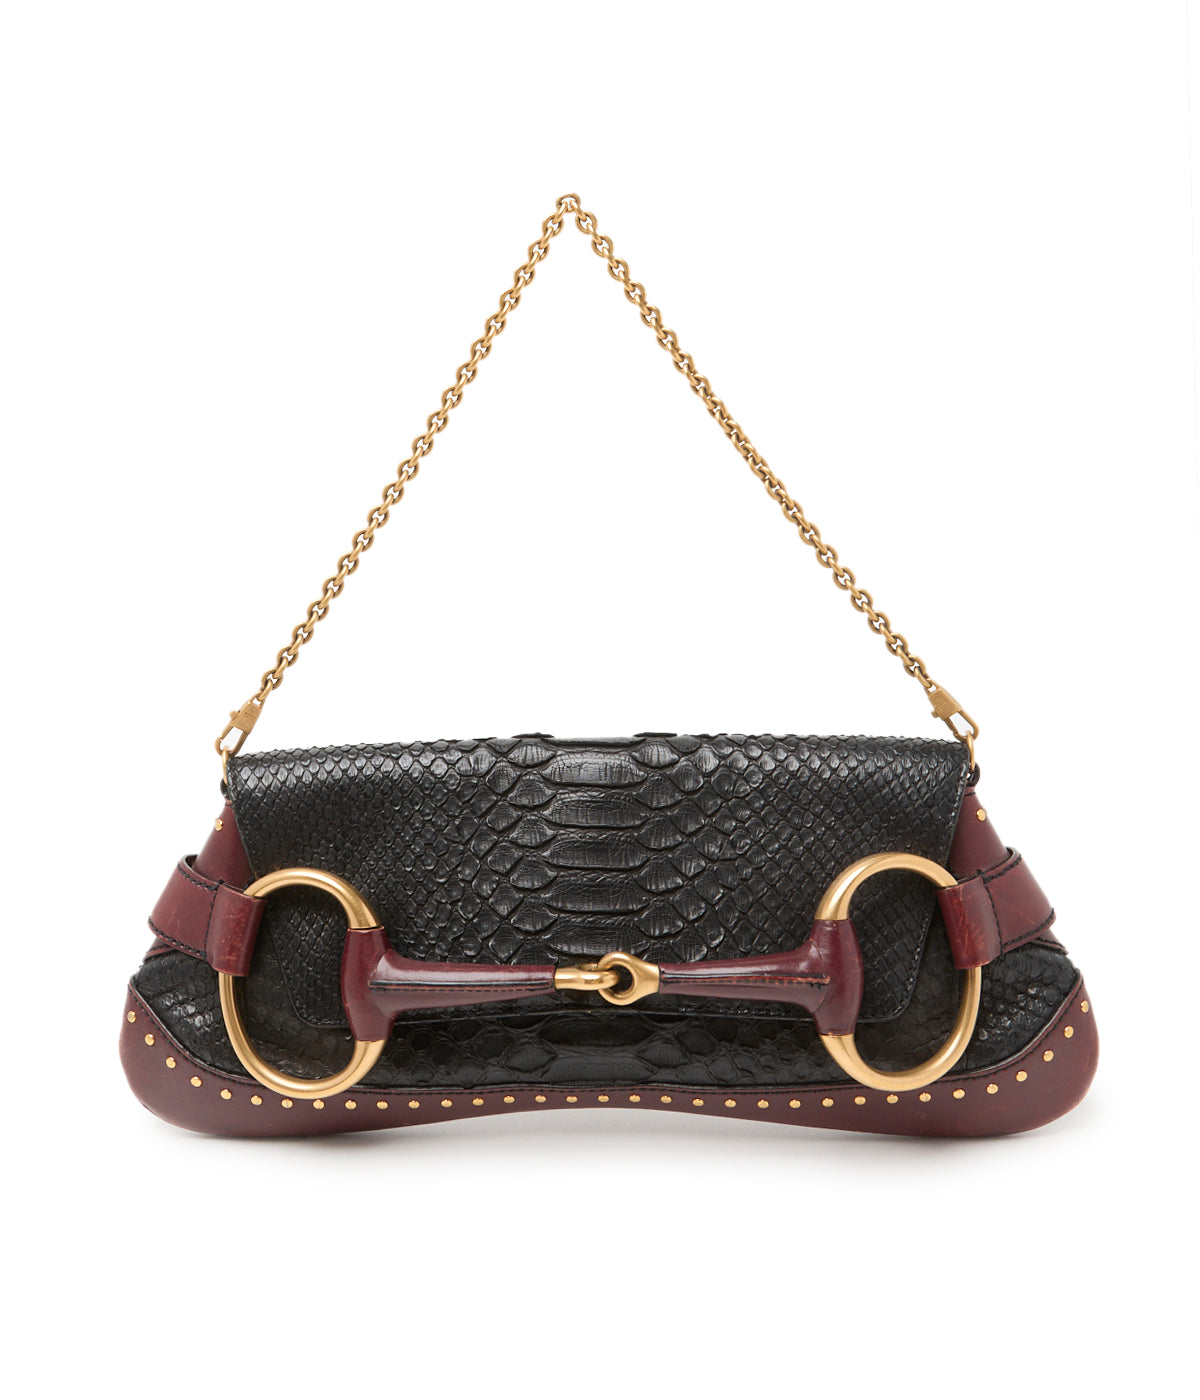 Pre-Owned Gucci Horsebit Tom Ford Python Chain Shoulder Bag